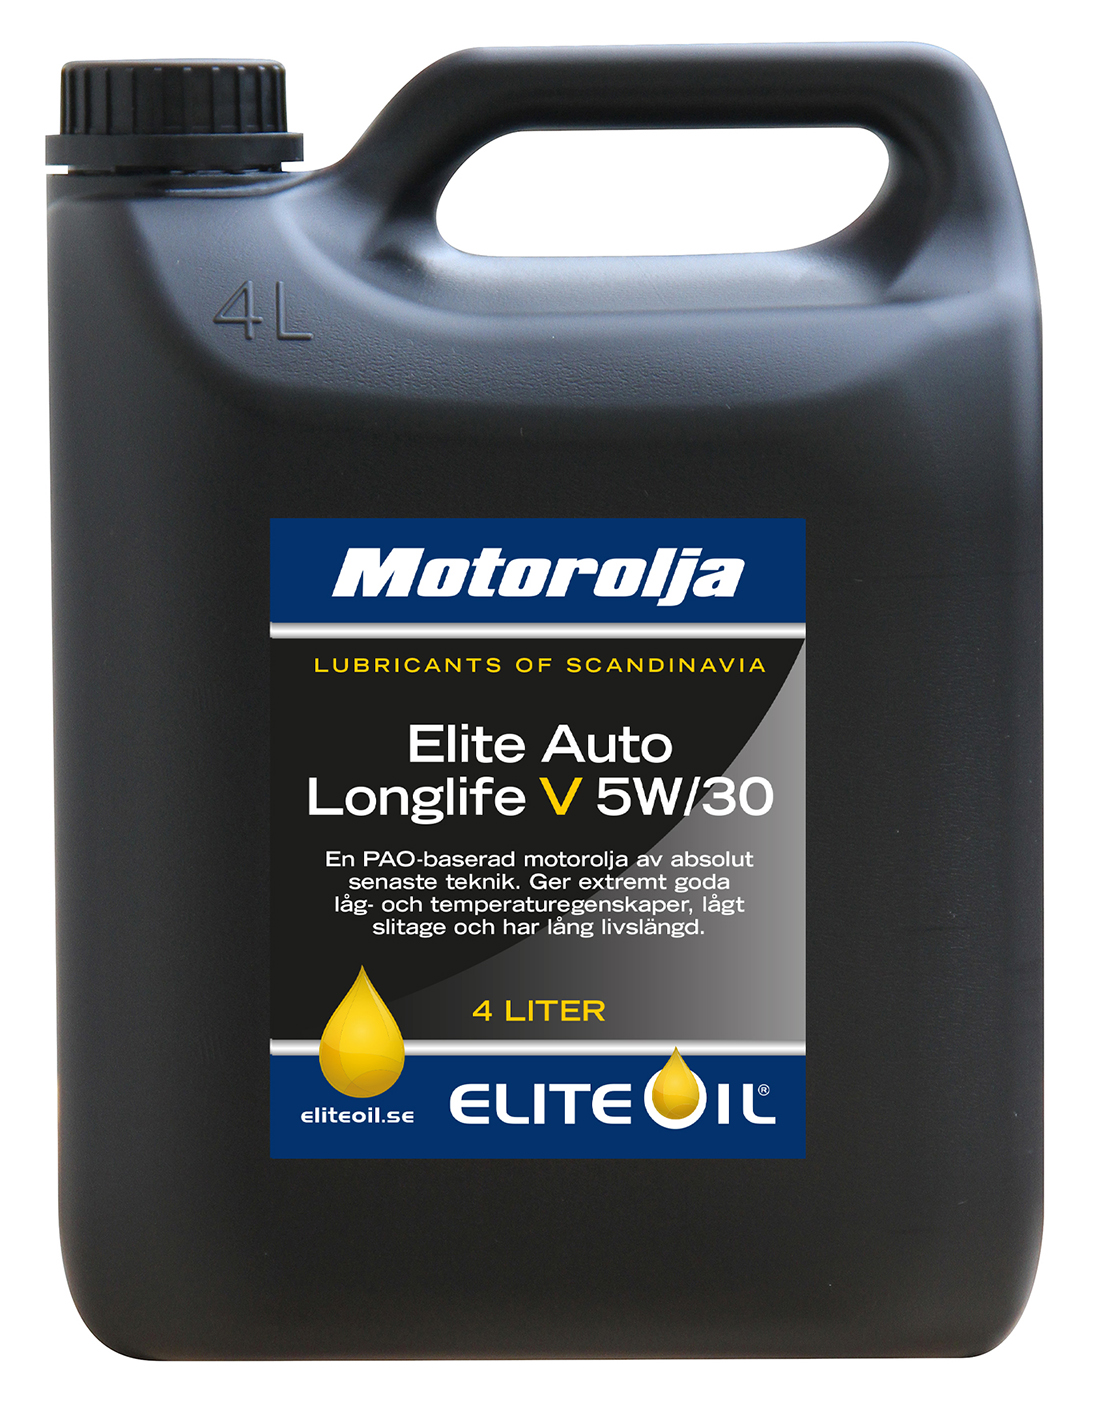 Elite Auto Longlife V, 5W/30, 4 liter dunk - 3 pack-image